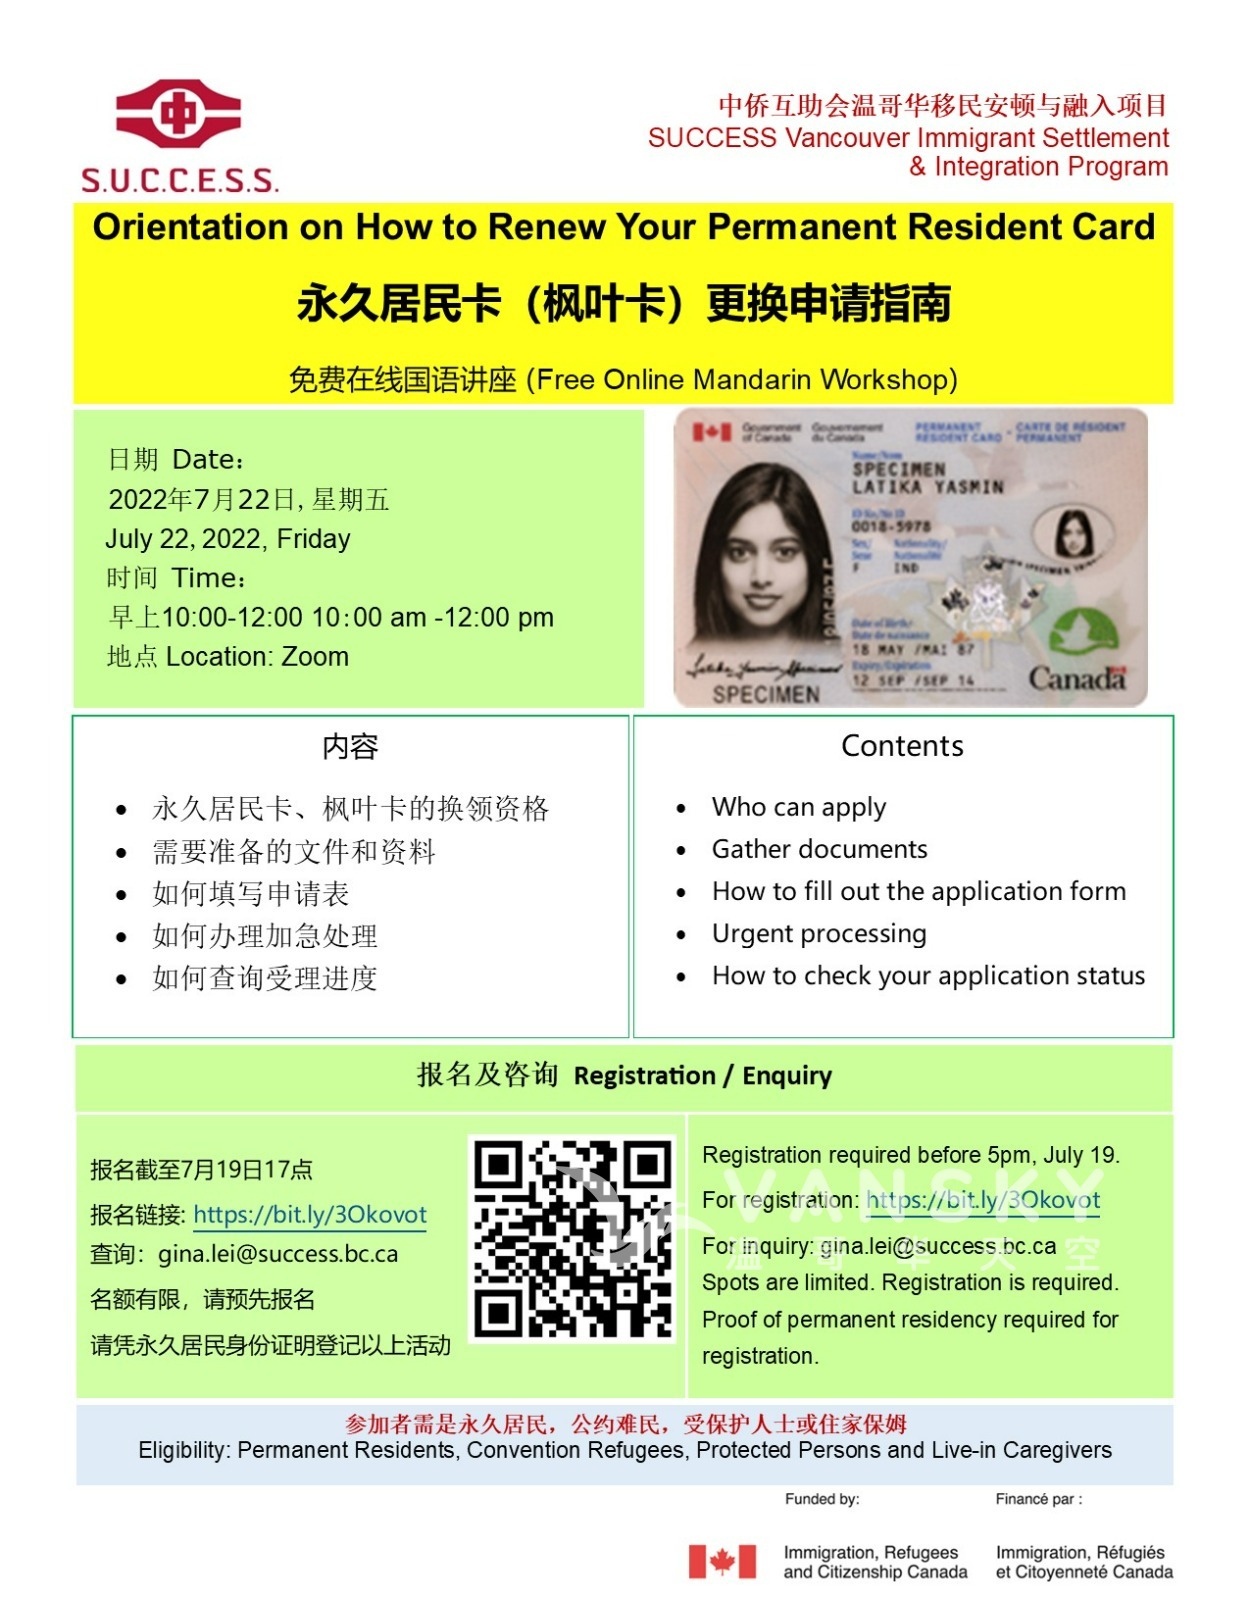 220628150106_20220722 PR Card Renewal Application Guide.jpg